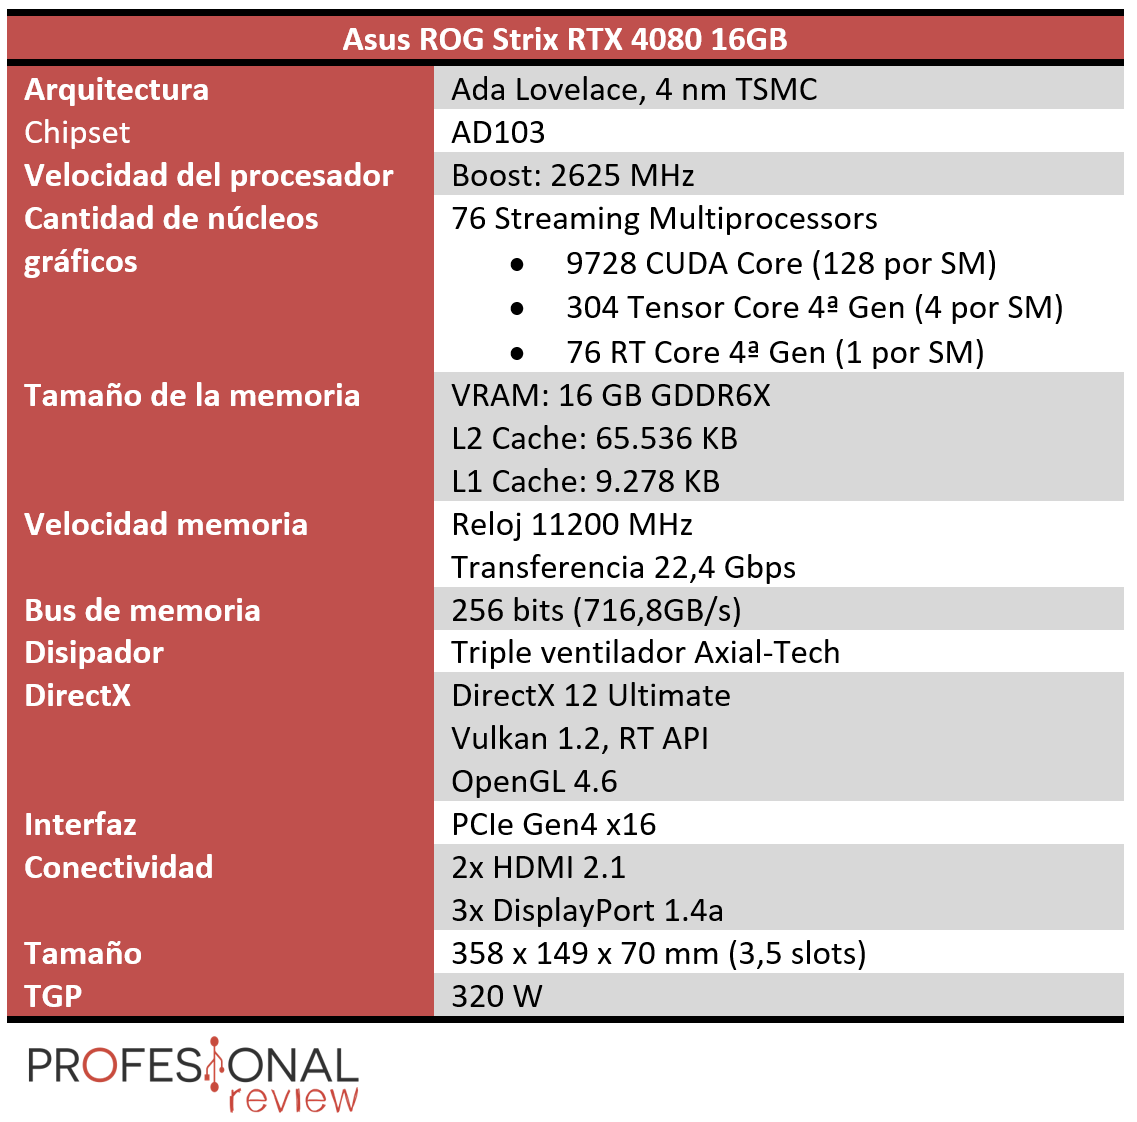 Asus ROG Strix RTX 4080 16GB Características